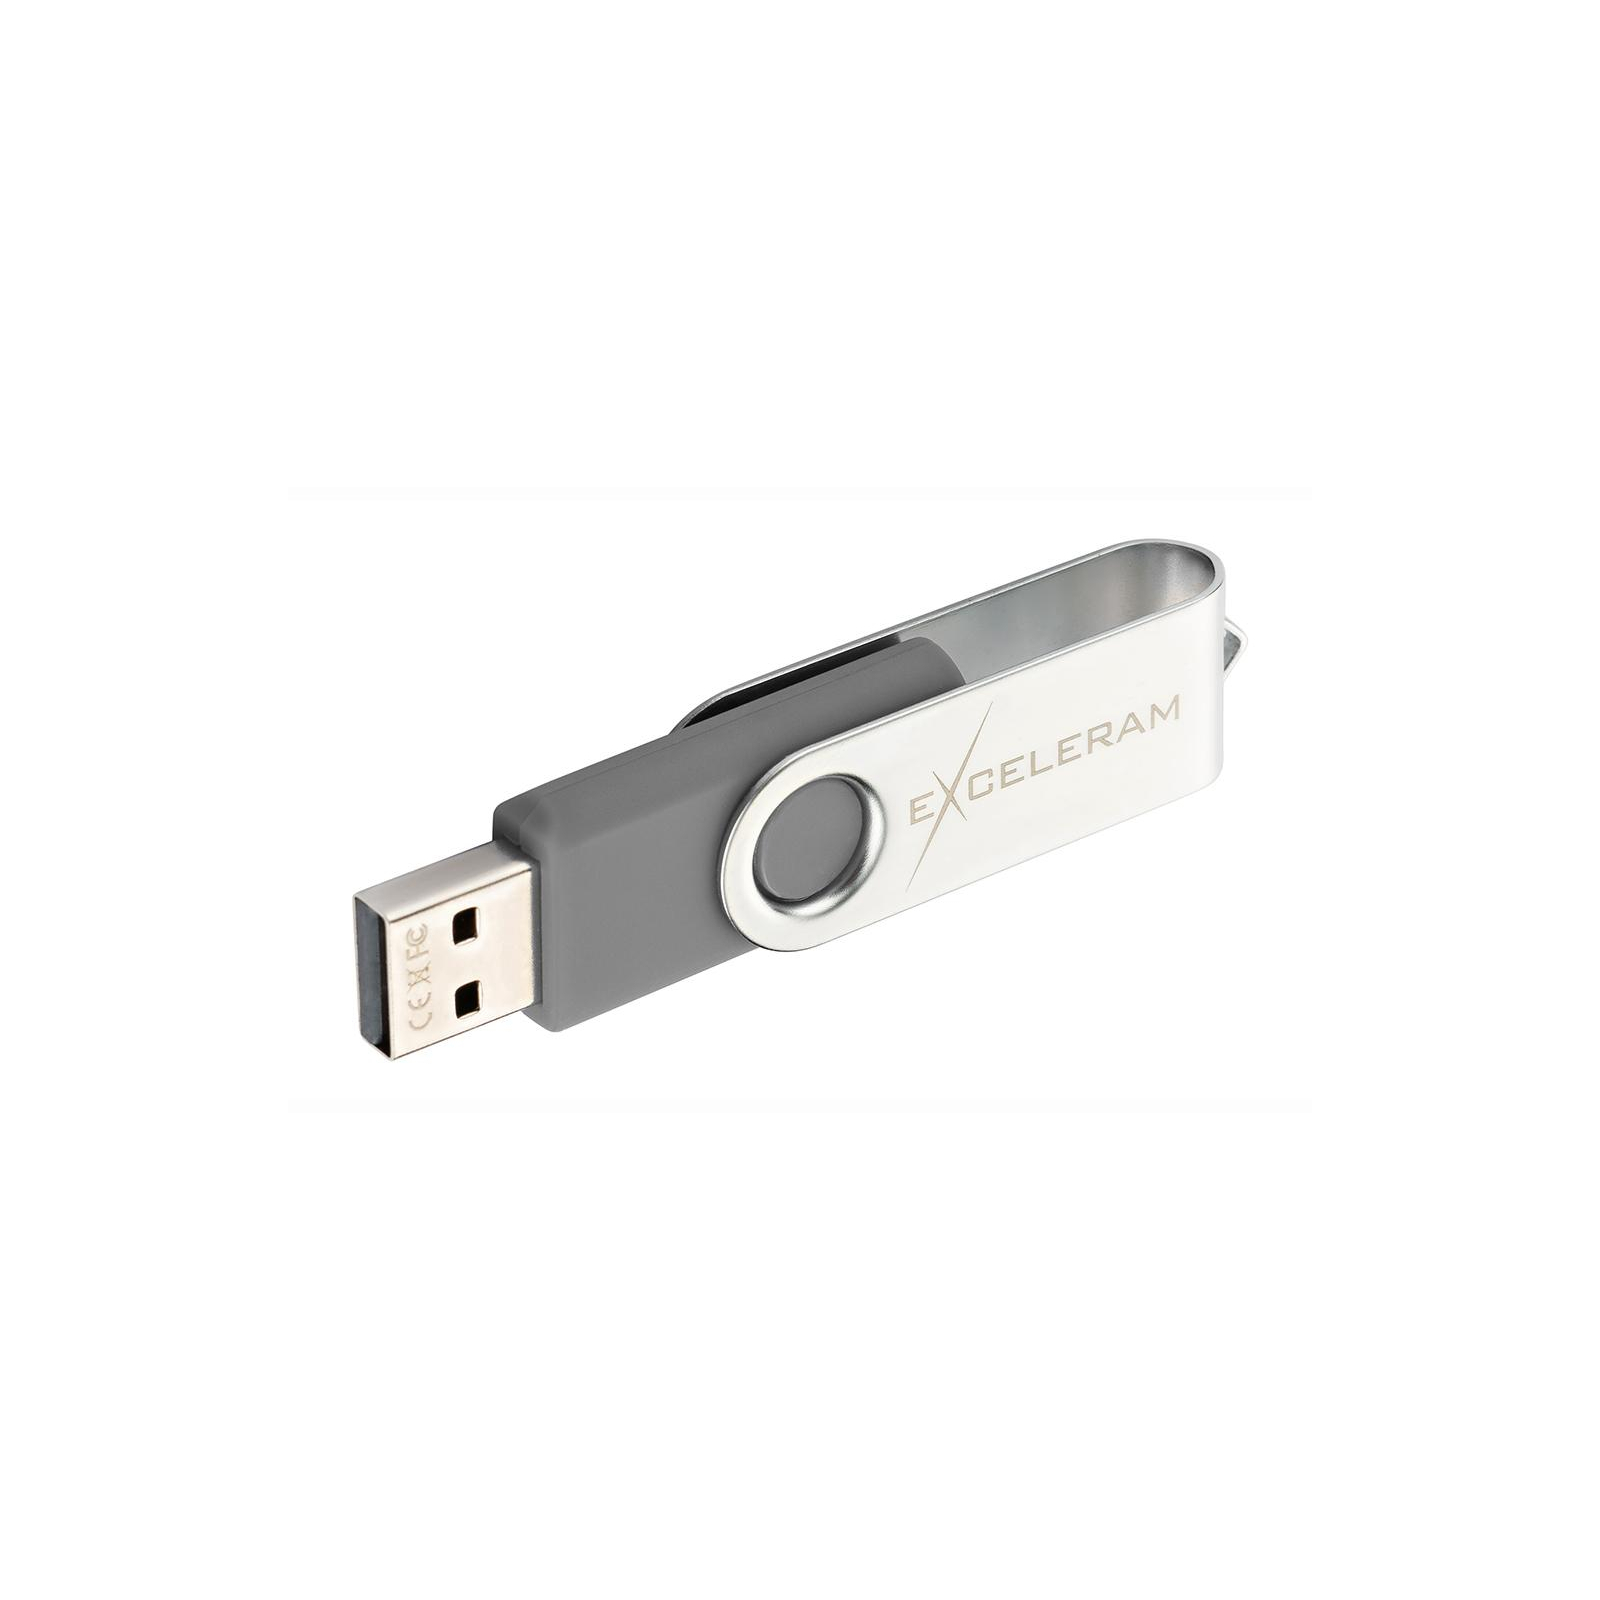 USB флеш накопитель eXceleram 32GB P1 Series Silver/Purple USB 2.0 (EXP1U2SIPU32) изображение 5